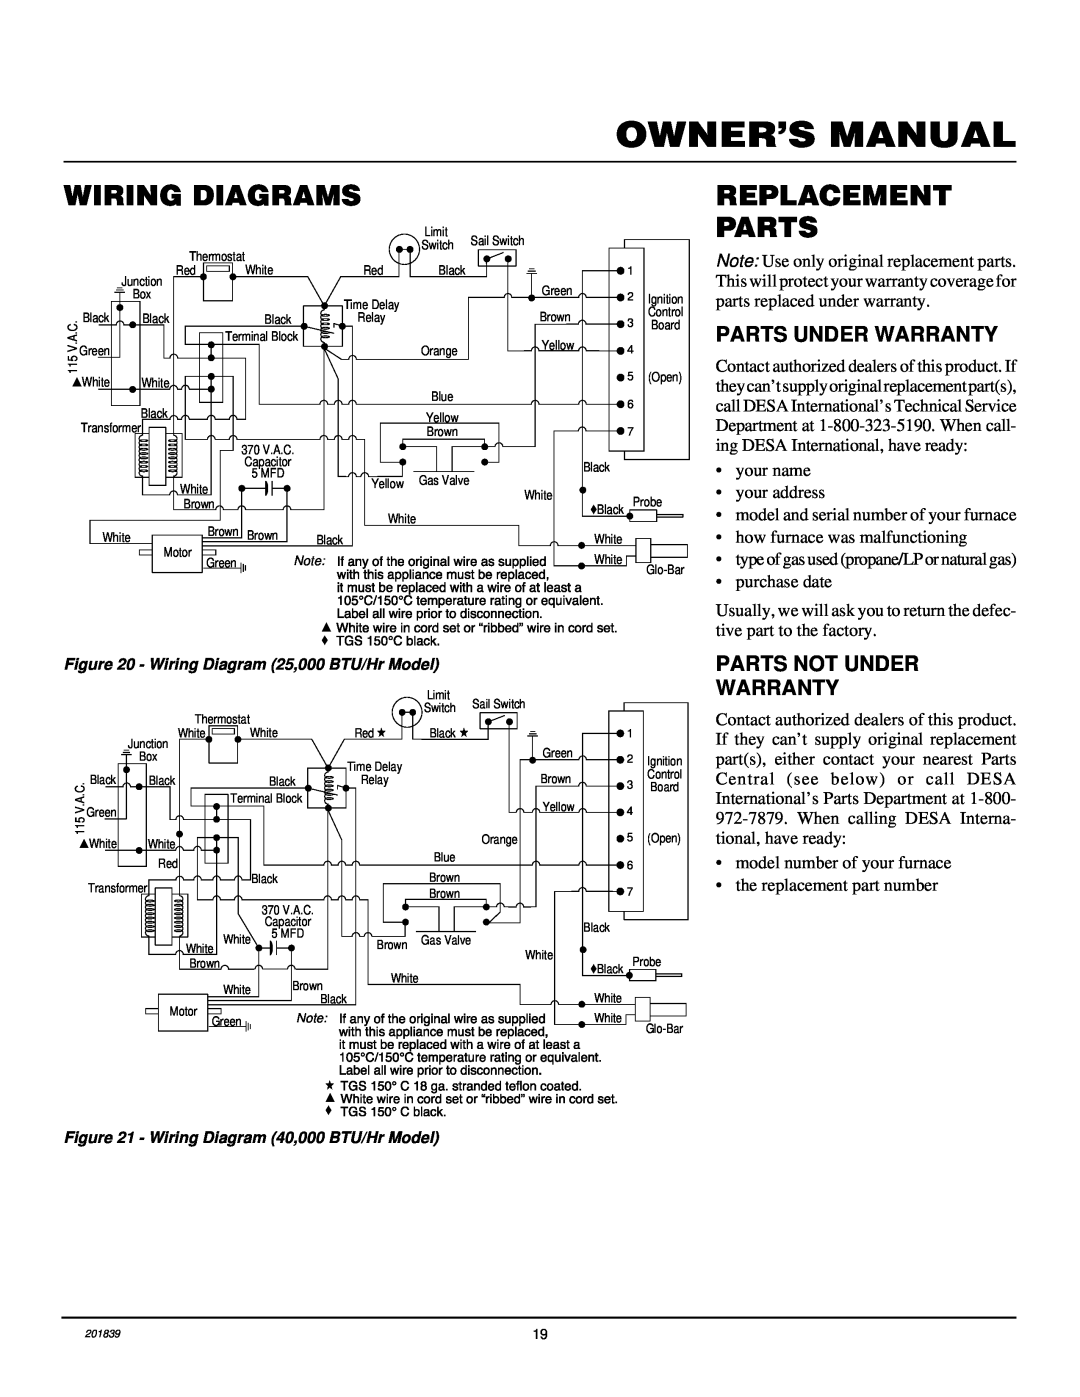 Desa DNV40PB, DNV25PB installation manual Wiring Diagrams, Replacement, Parts Under Warranty, Parts Not Under Warranty 